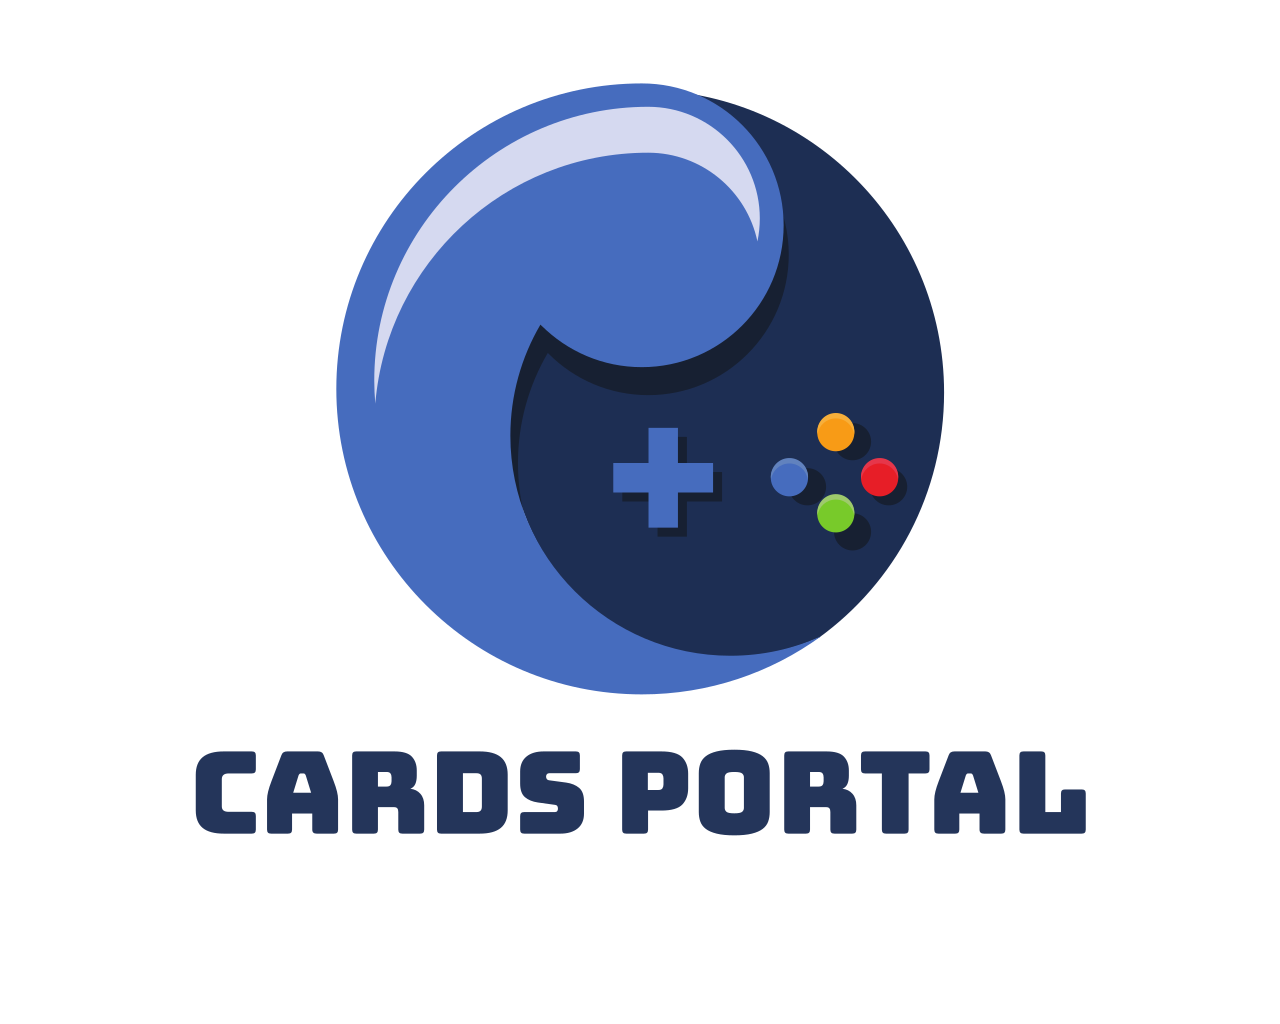 Cards Portal